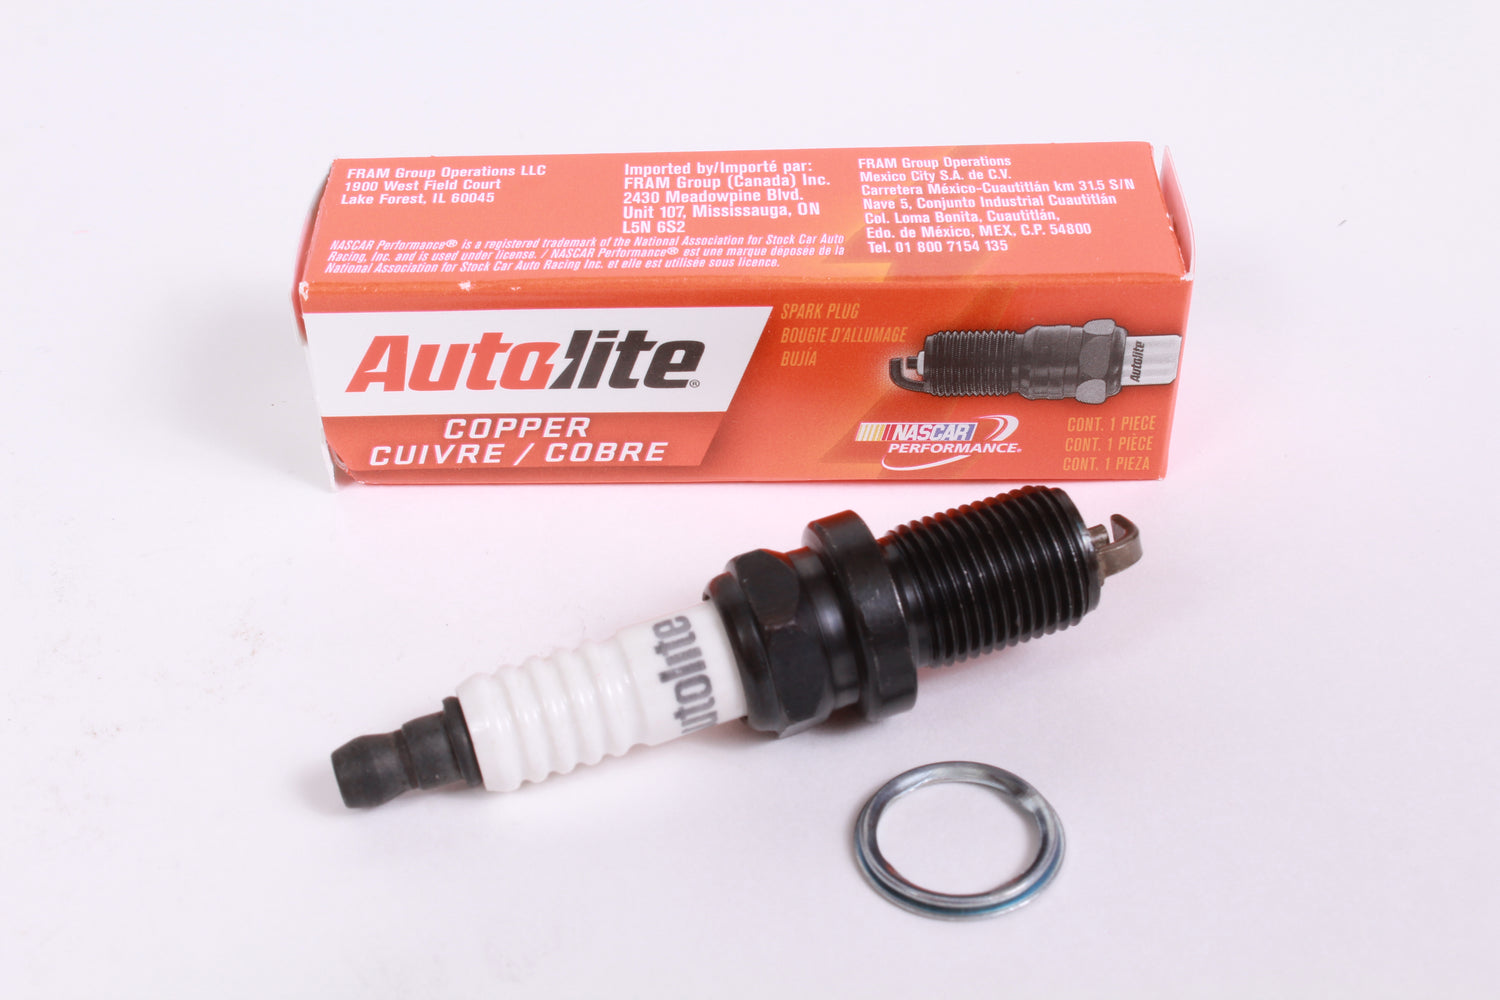 Genuine Autolite 3926 Copper Resistor Spark Plug